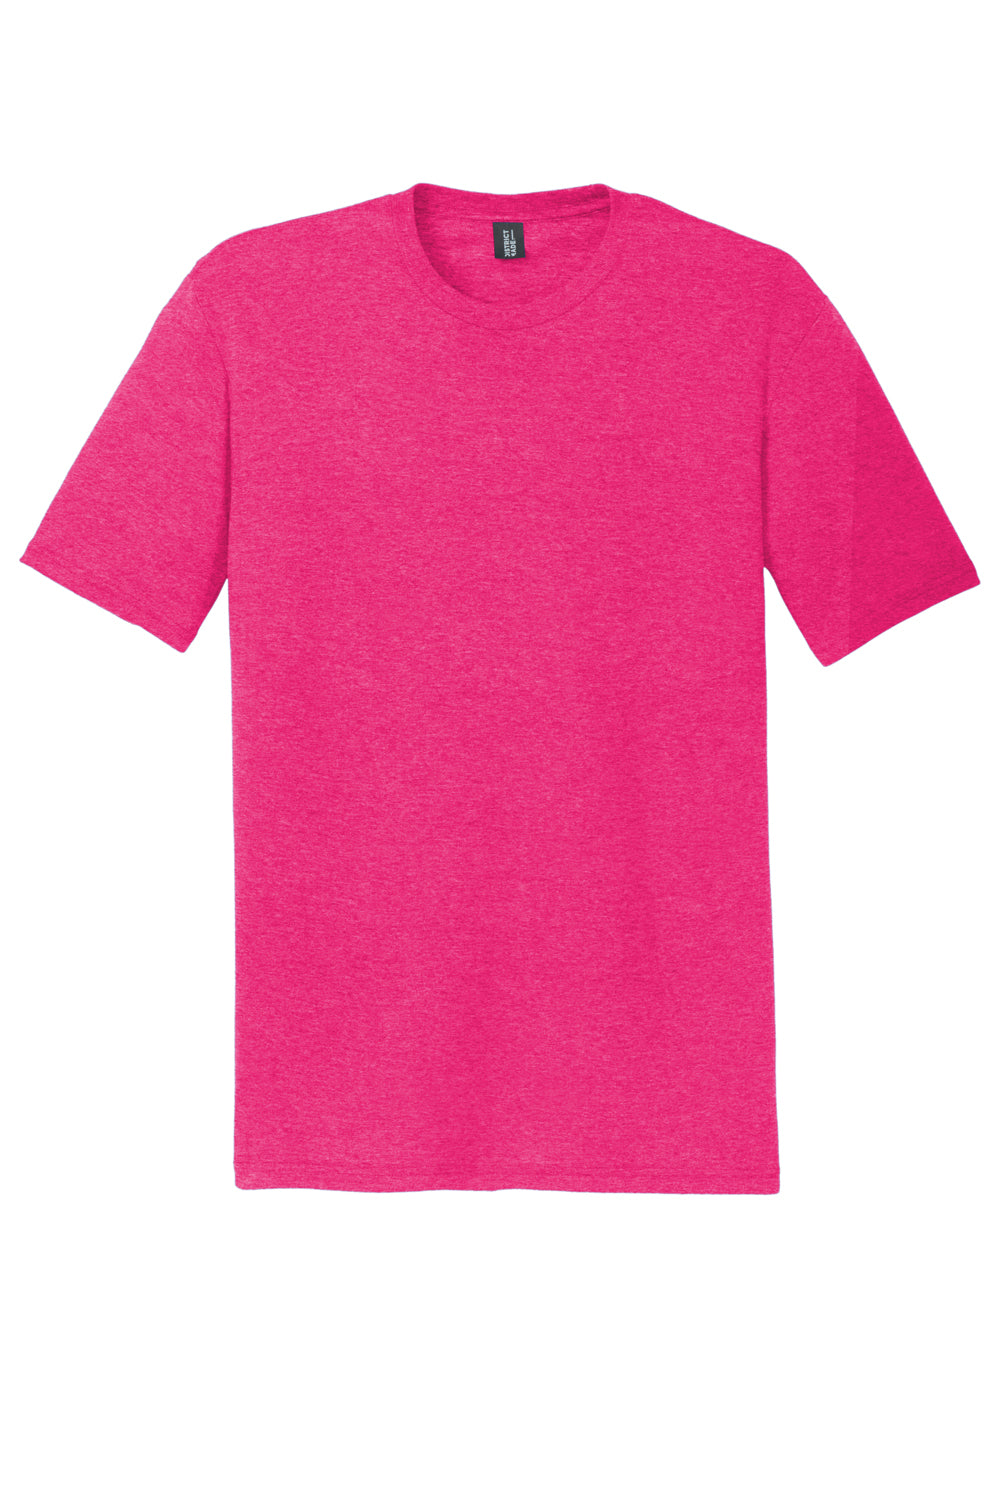 District DM130 Mens Perfect Tri Short Sleeve Crewneck T-Shirt Fuchsia Pink Frost Flat Front